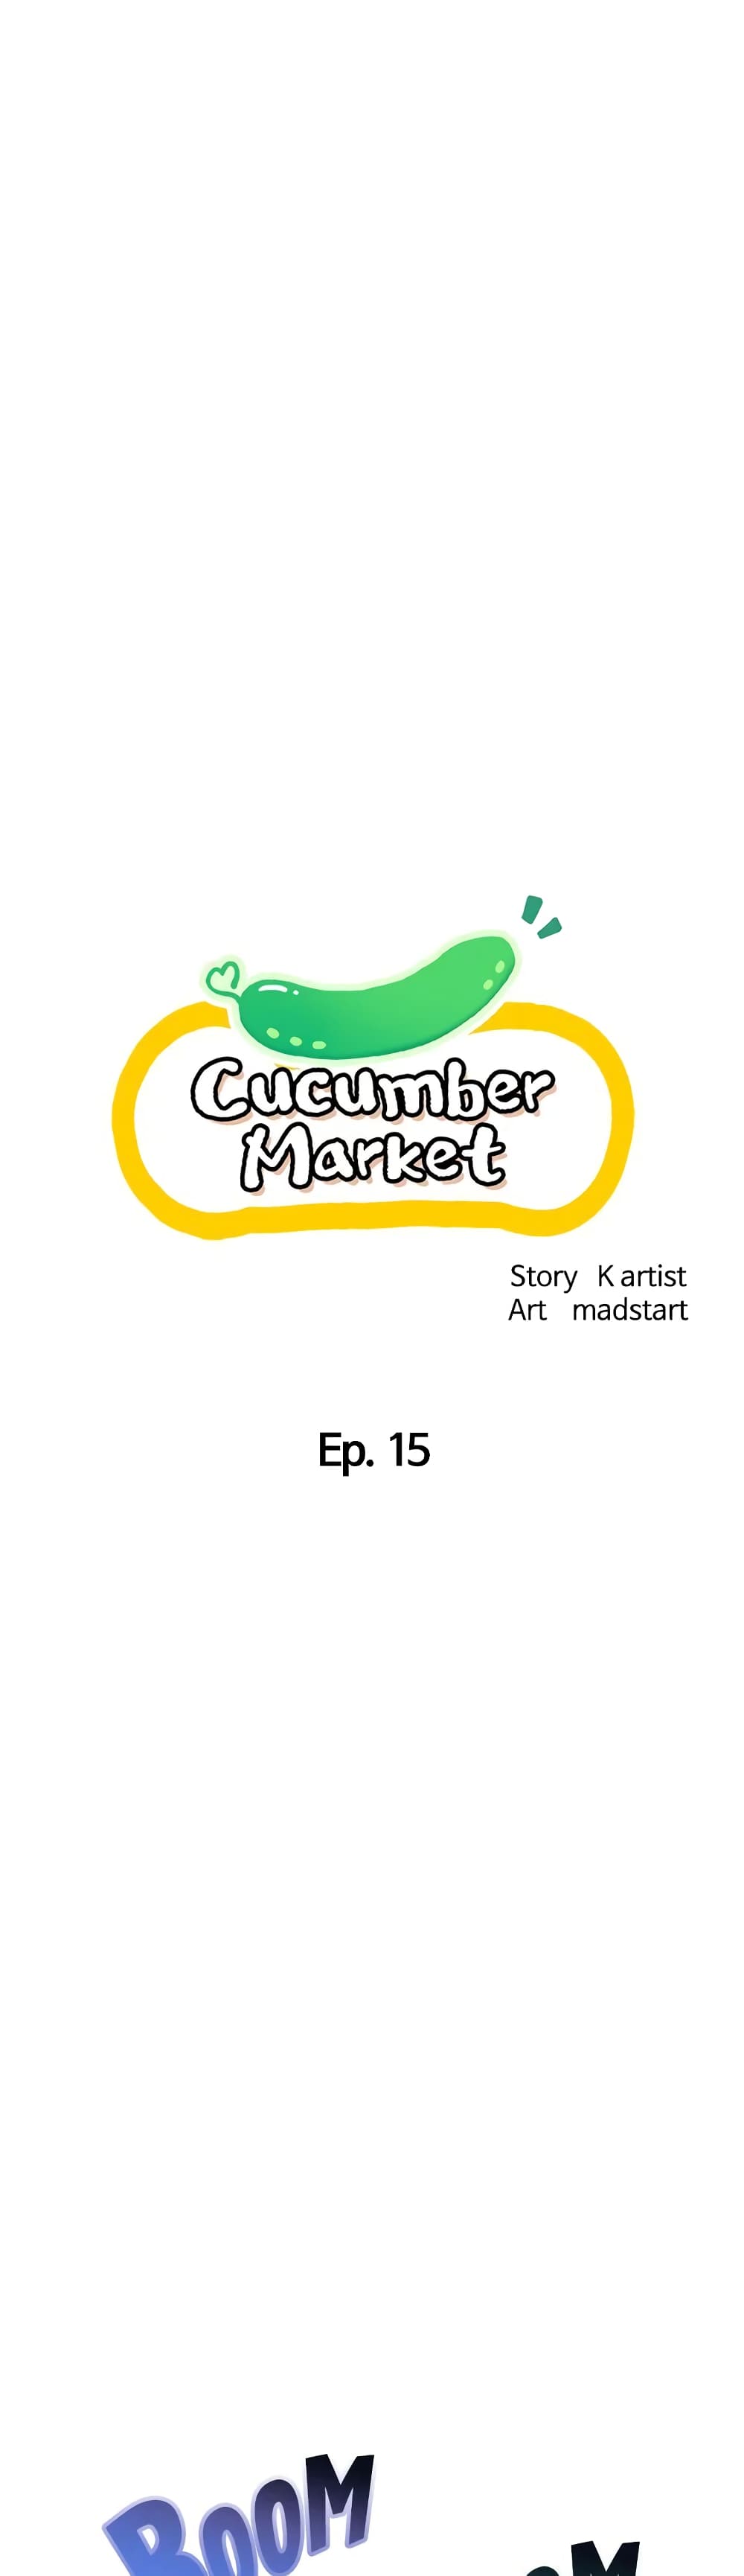 Cucumber Market 15-15